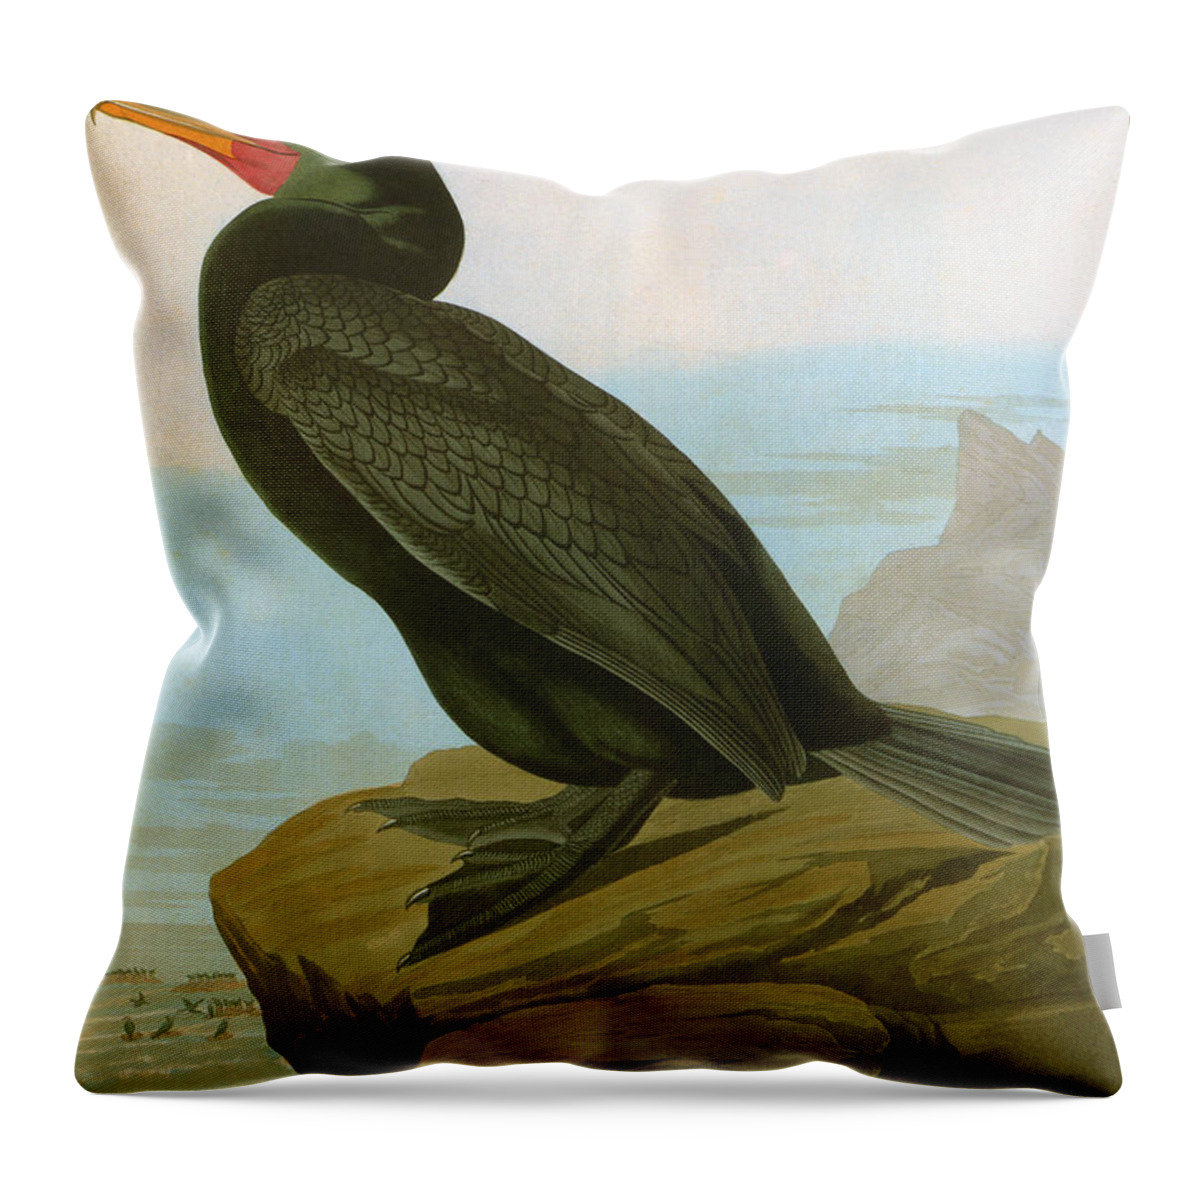 1838 Throw Pillow featuring the photograph Audubon: Cormorant #1 by Granger